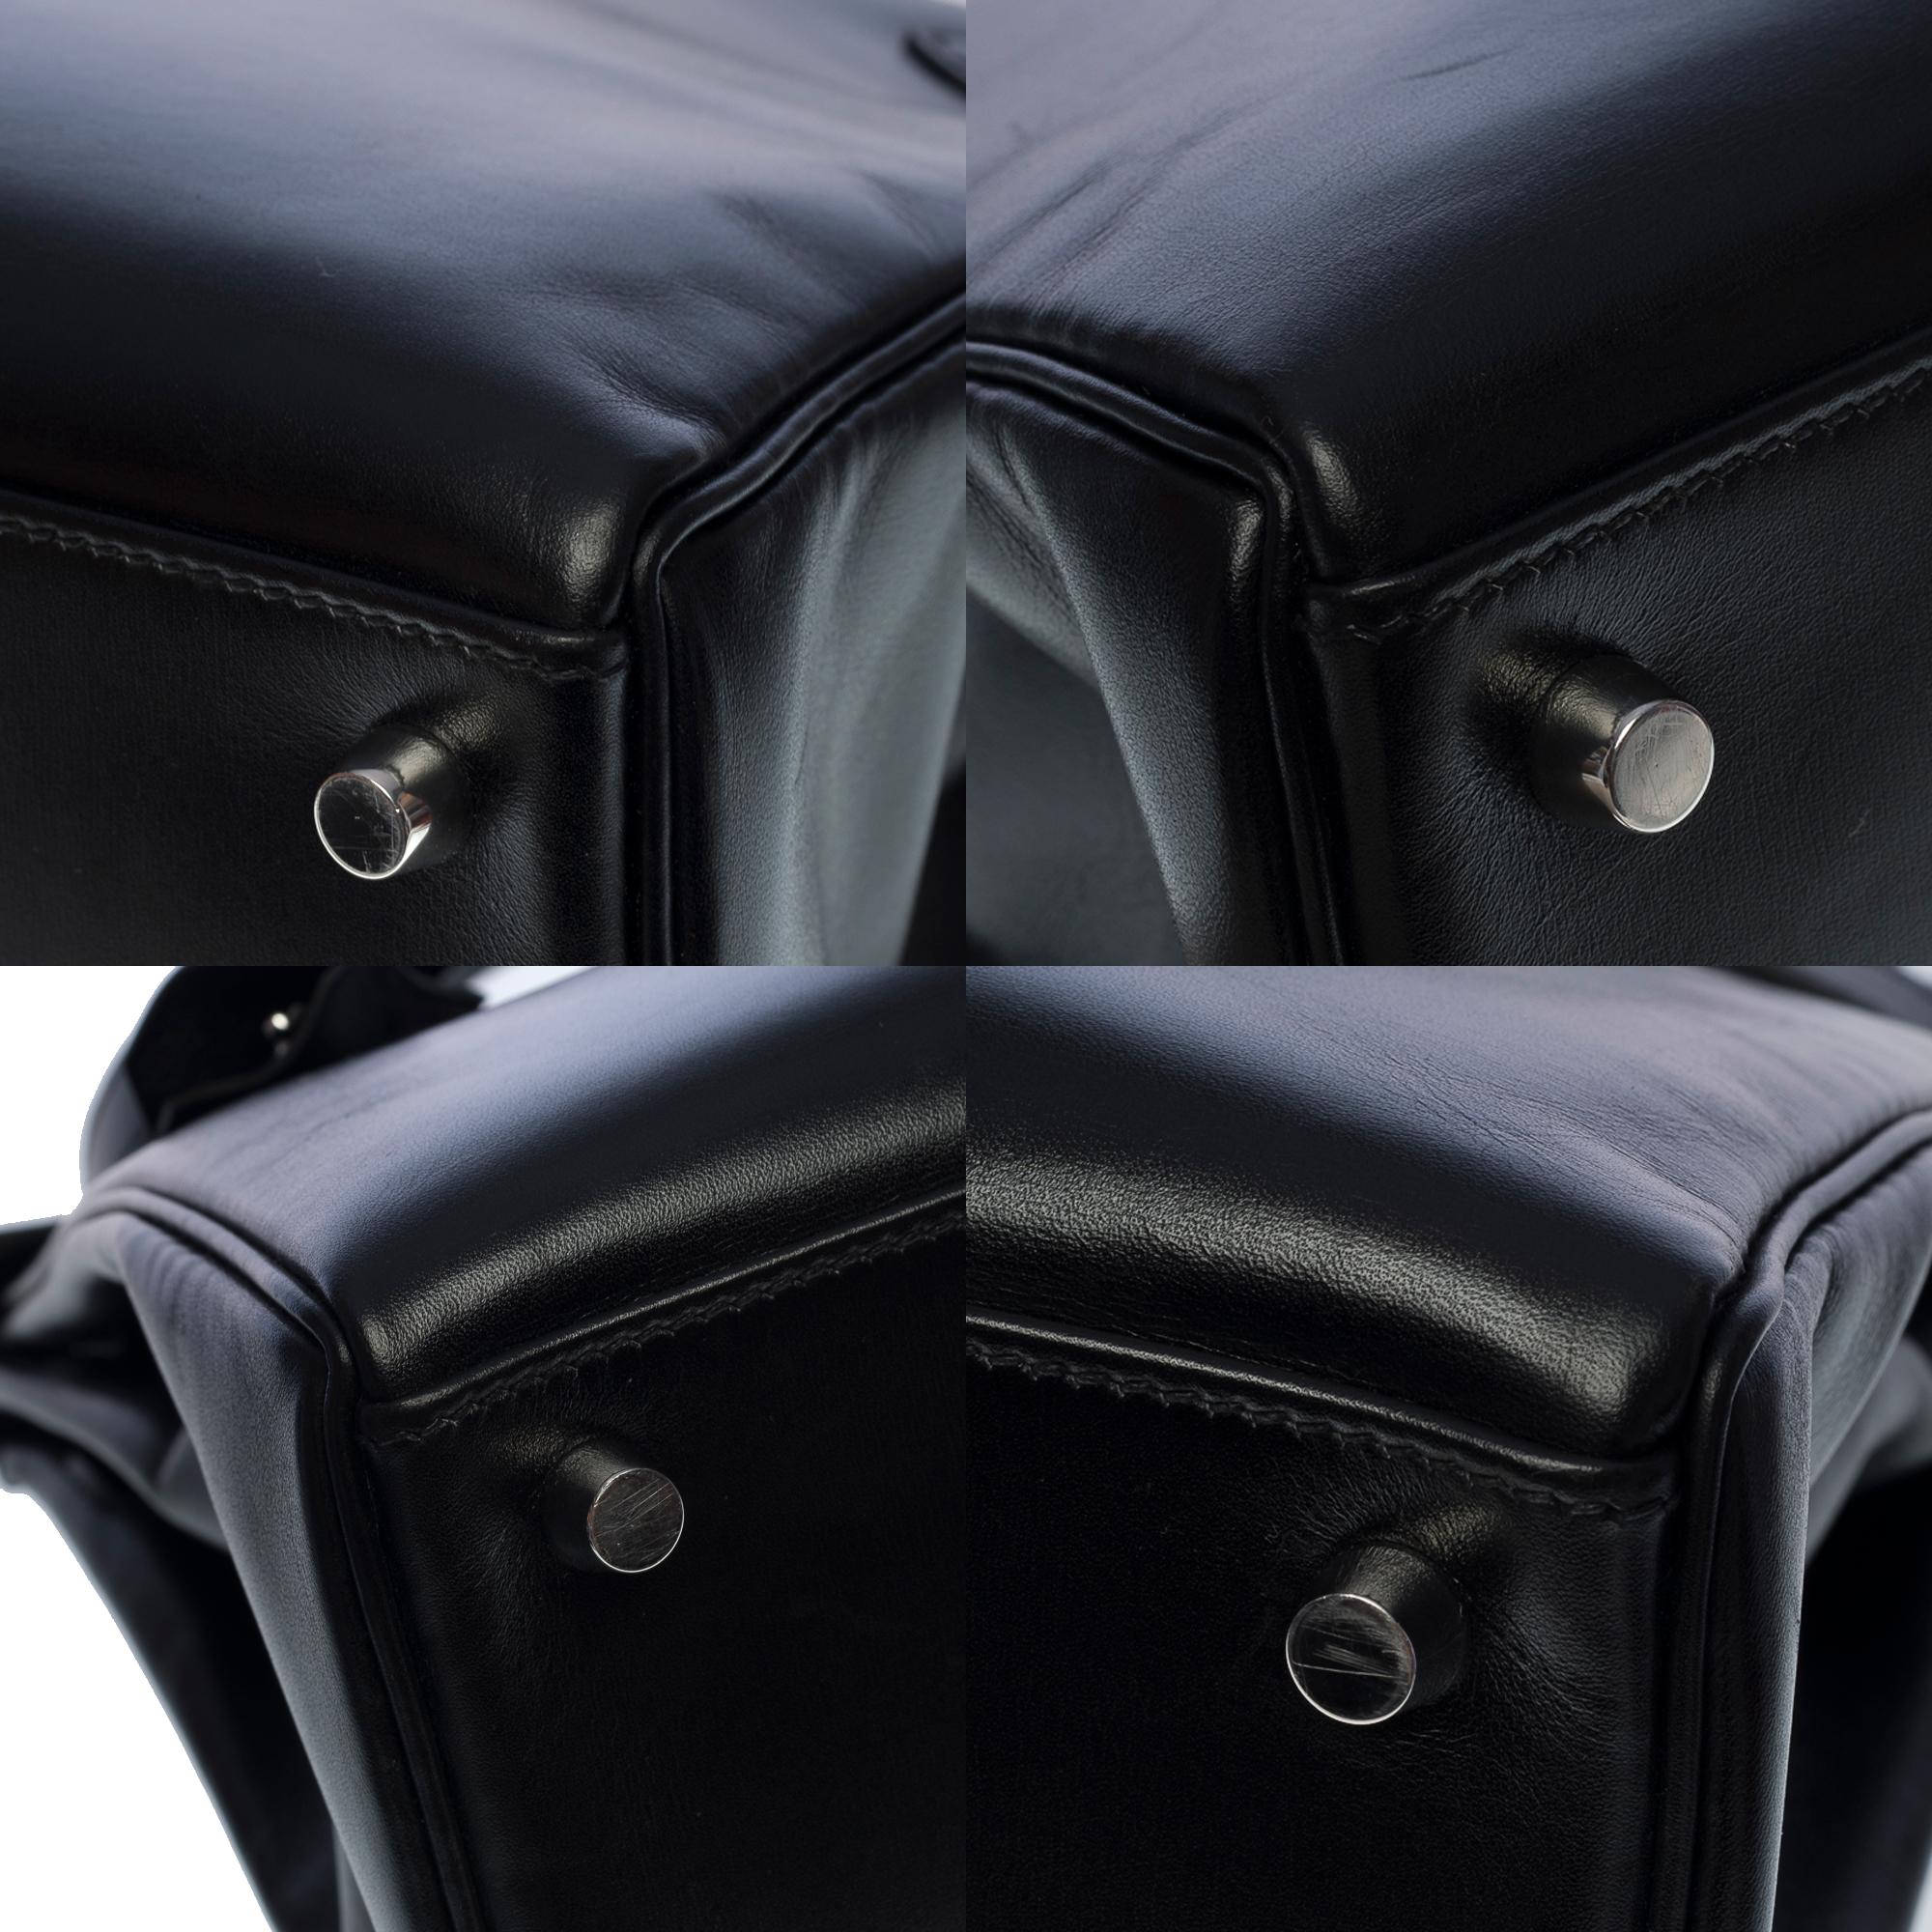 Rare Hermès Kelly 32 retourne handbag strap in black box calf leather, SHW 3